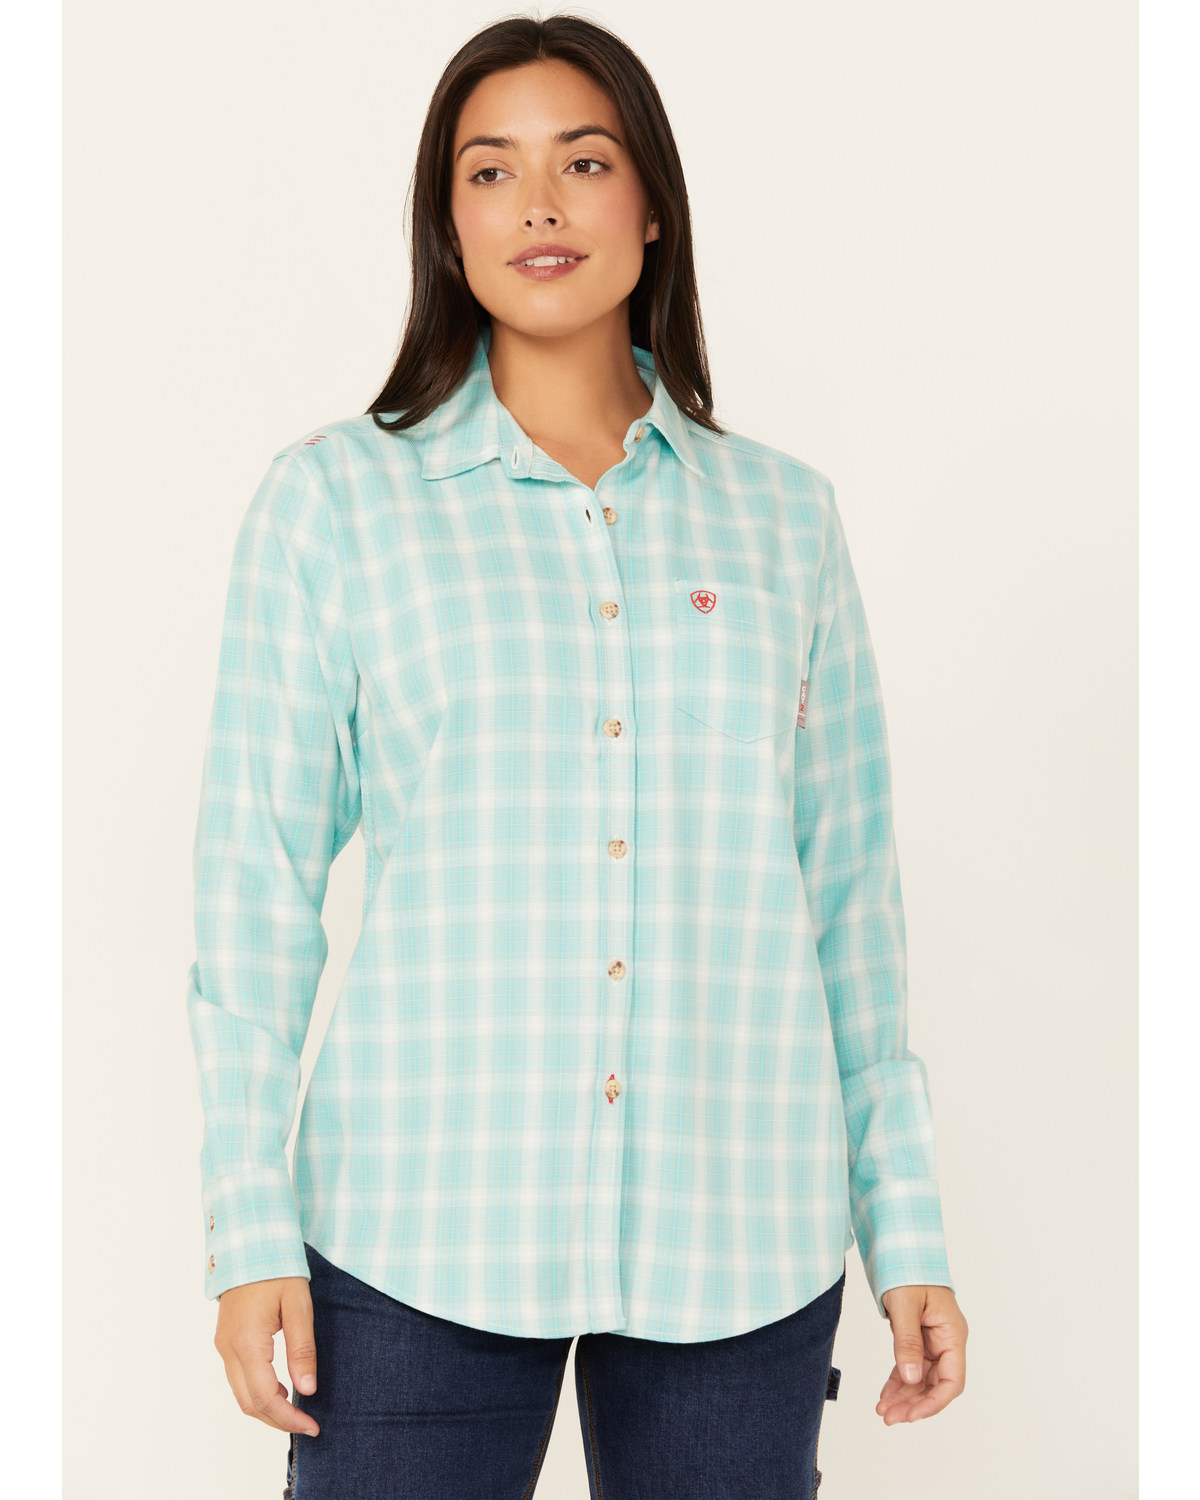 Ariat Women's FR Catalina Plaid Print Long Sleeve Button-Down Work Shirt